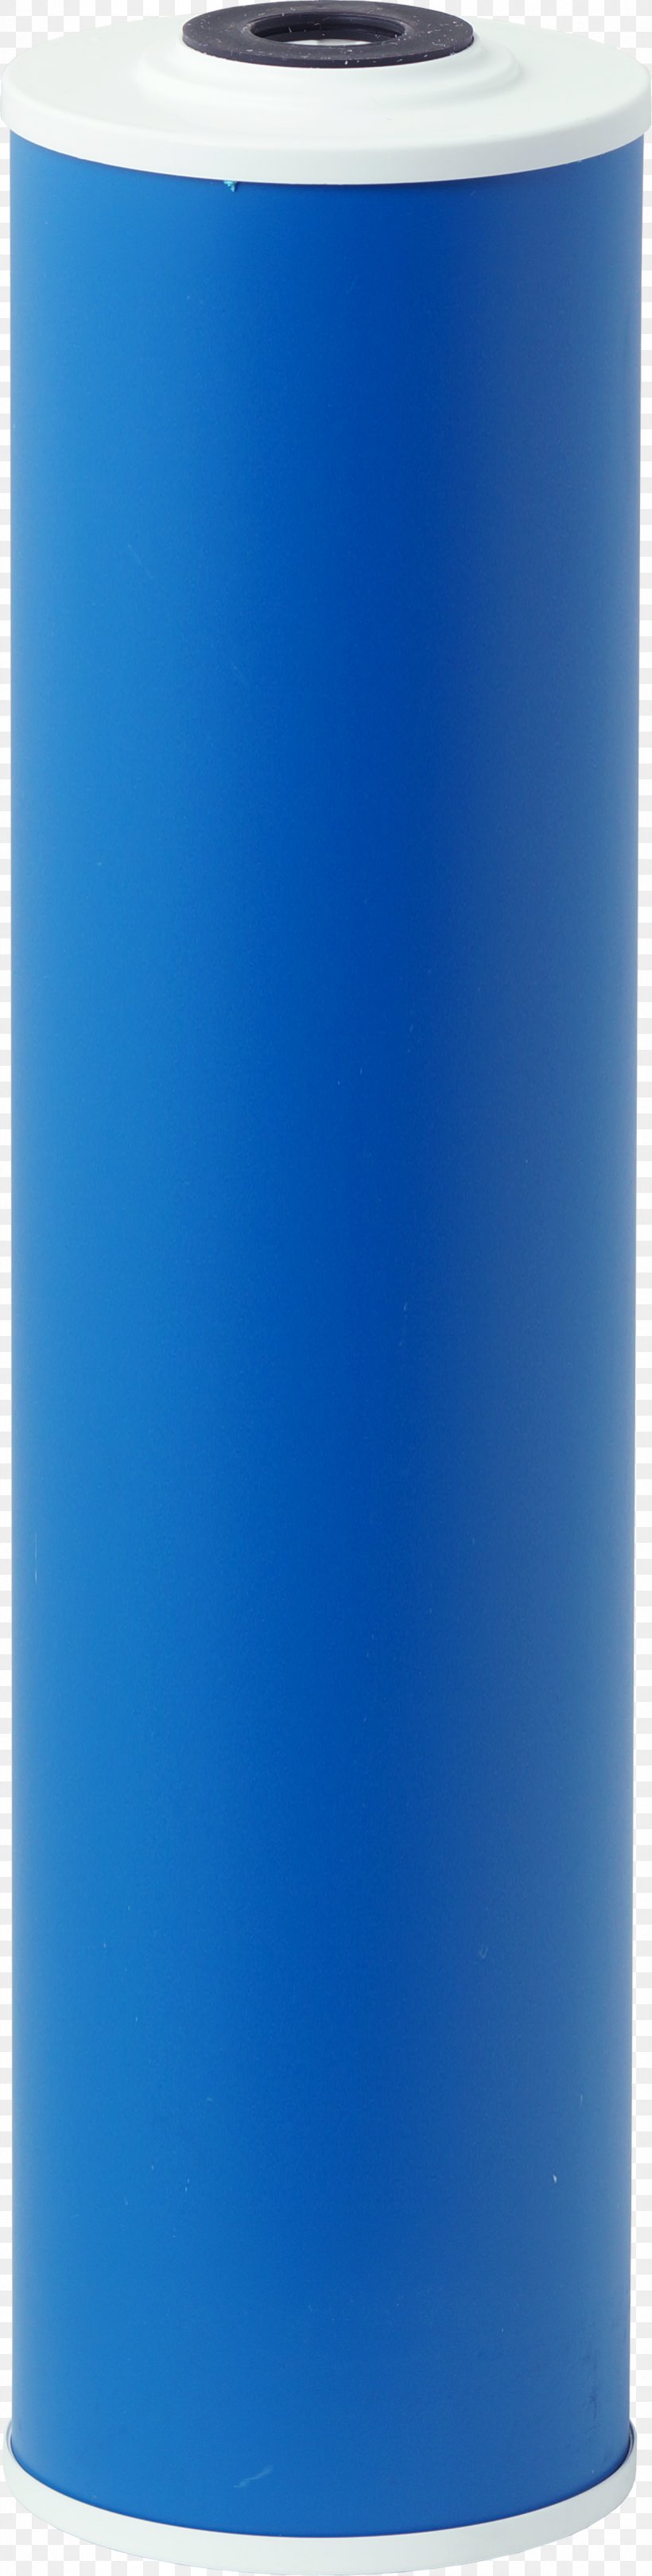 Water Filter Cobalt Blue, PNG, 1209x4777px, Water Filter, Activated Carbon, Chlorine, Cobalt, Cobalt Blue Download Free